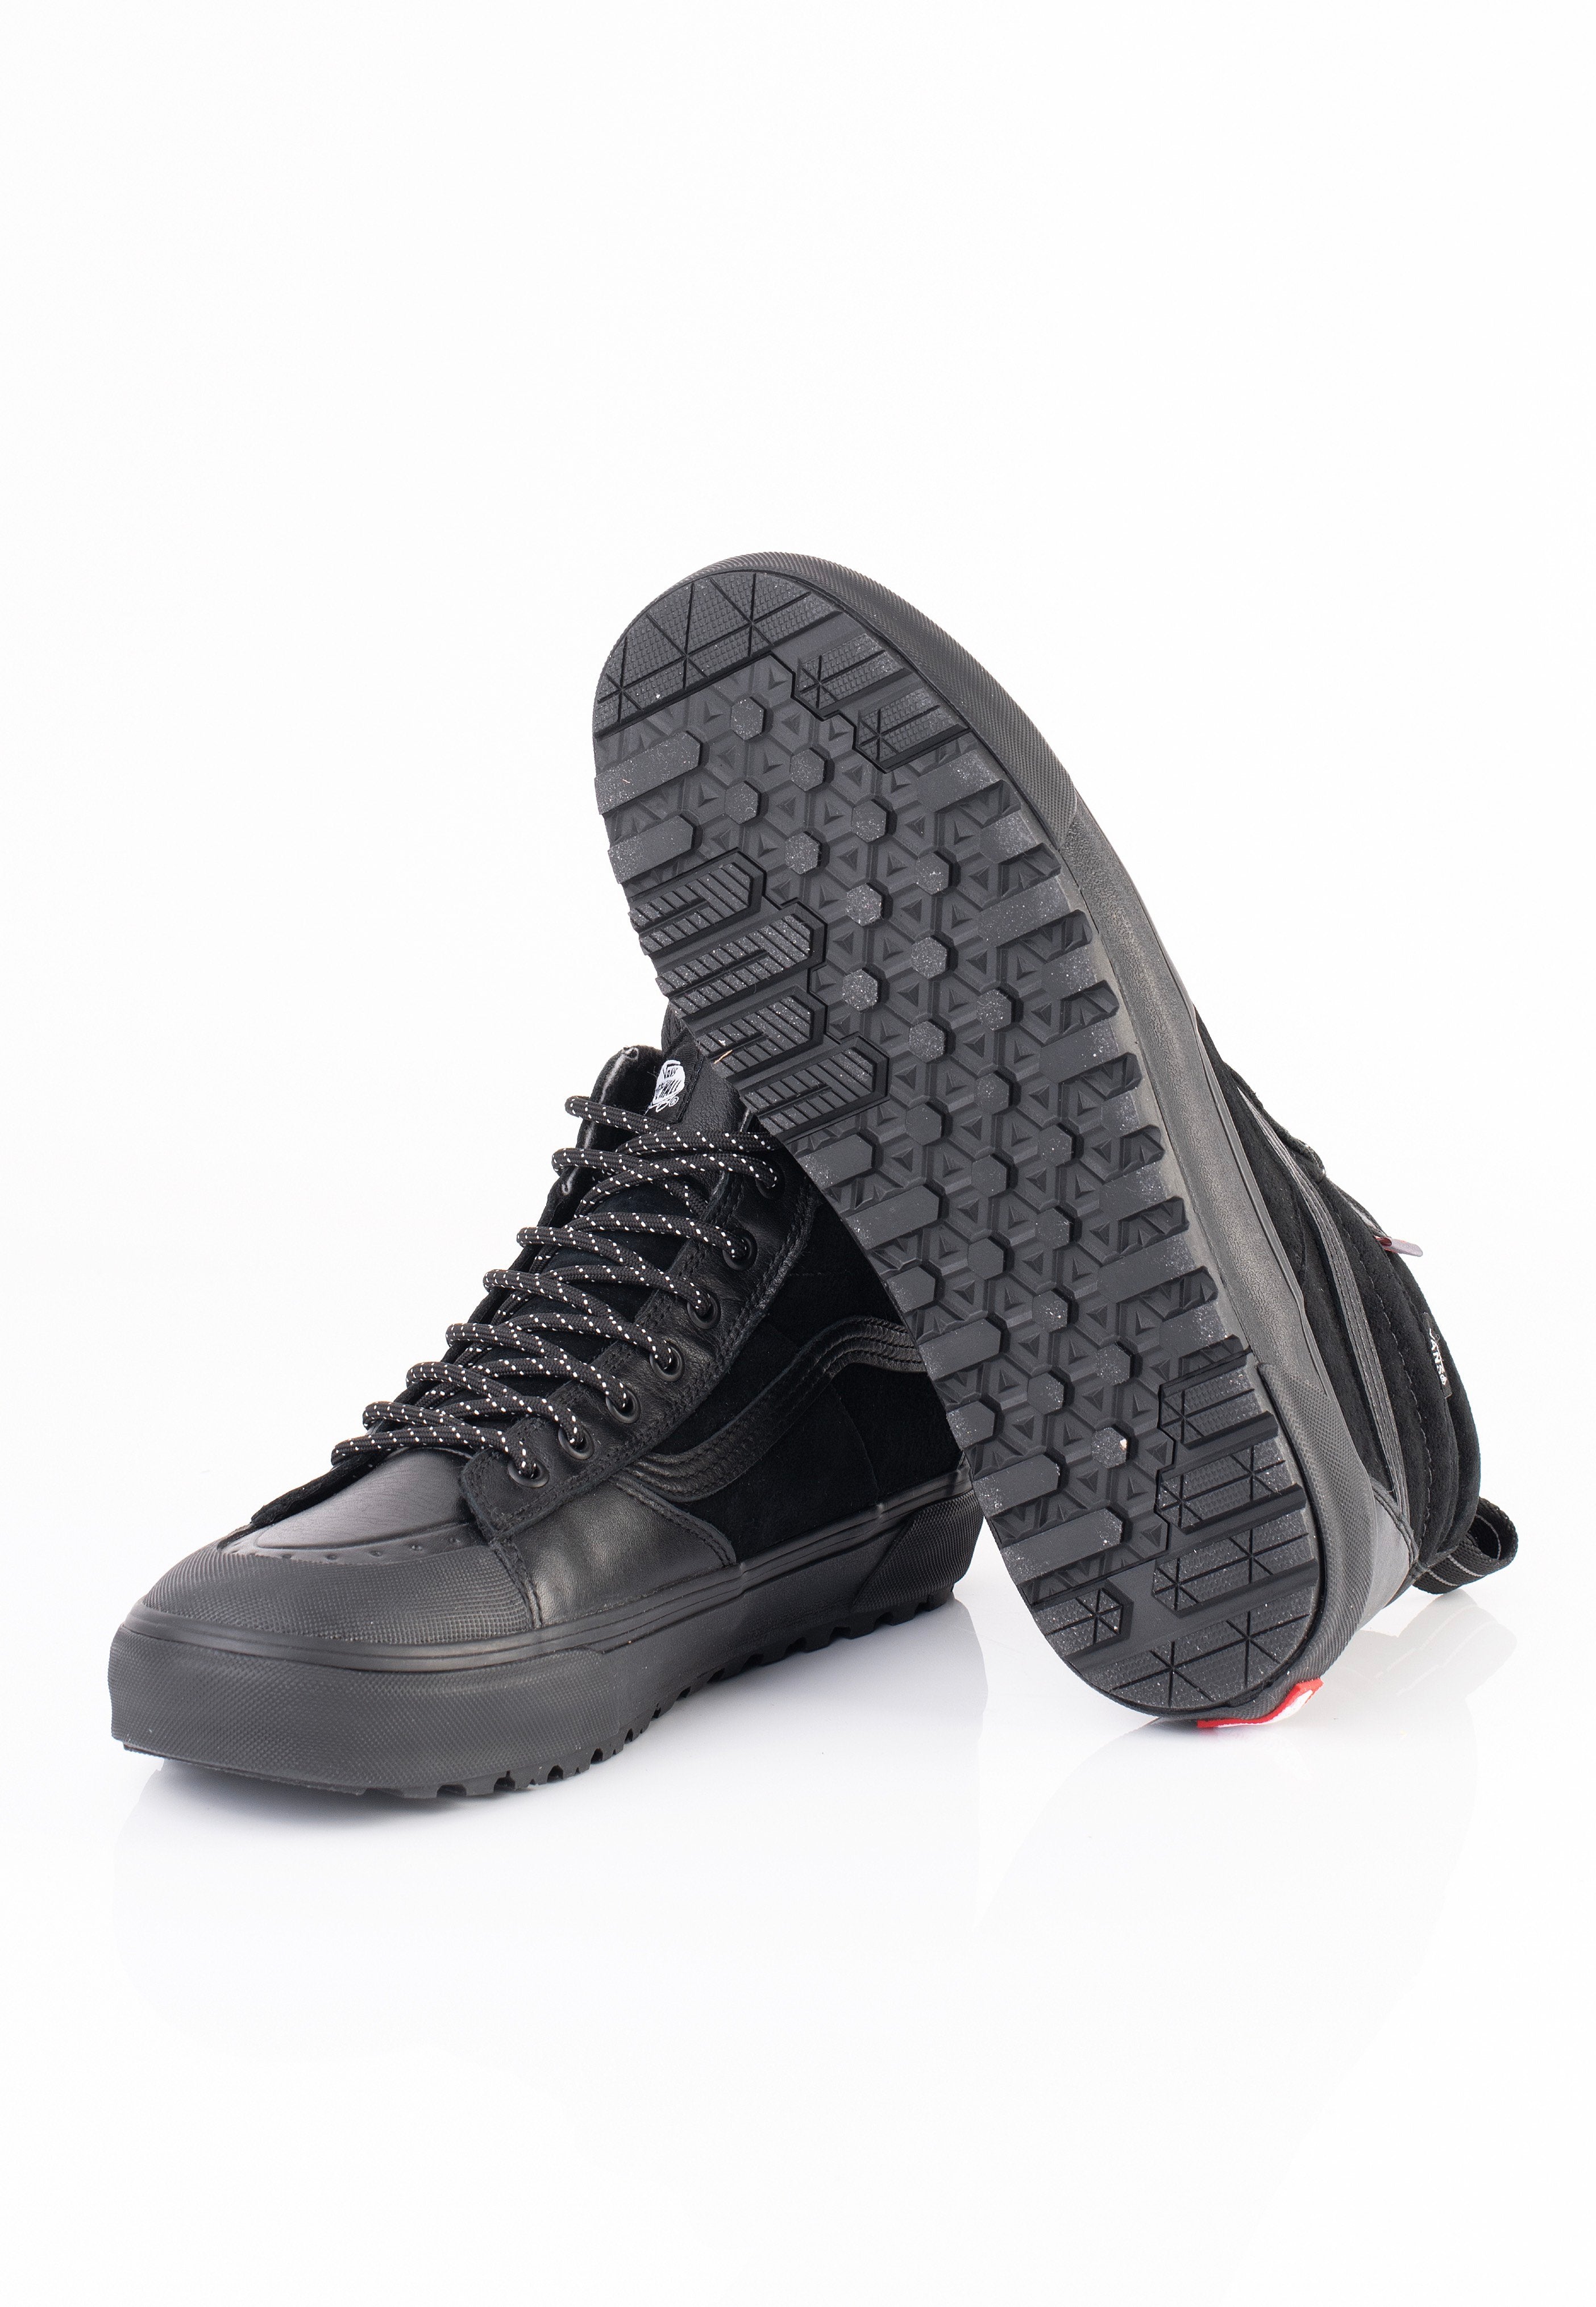 Vans - Sk8 Hi MTE 2 Black/Black - Shoes